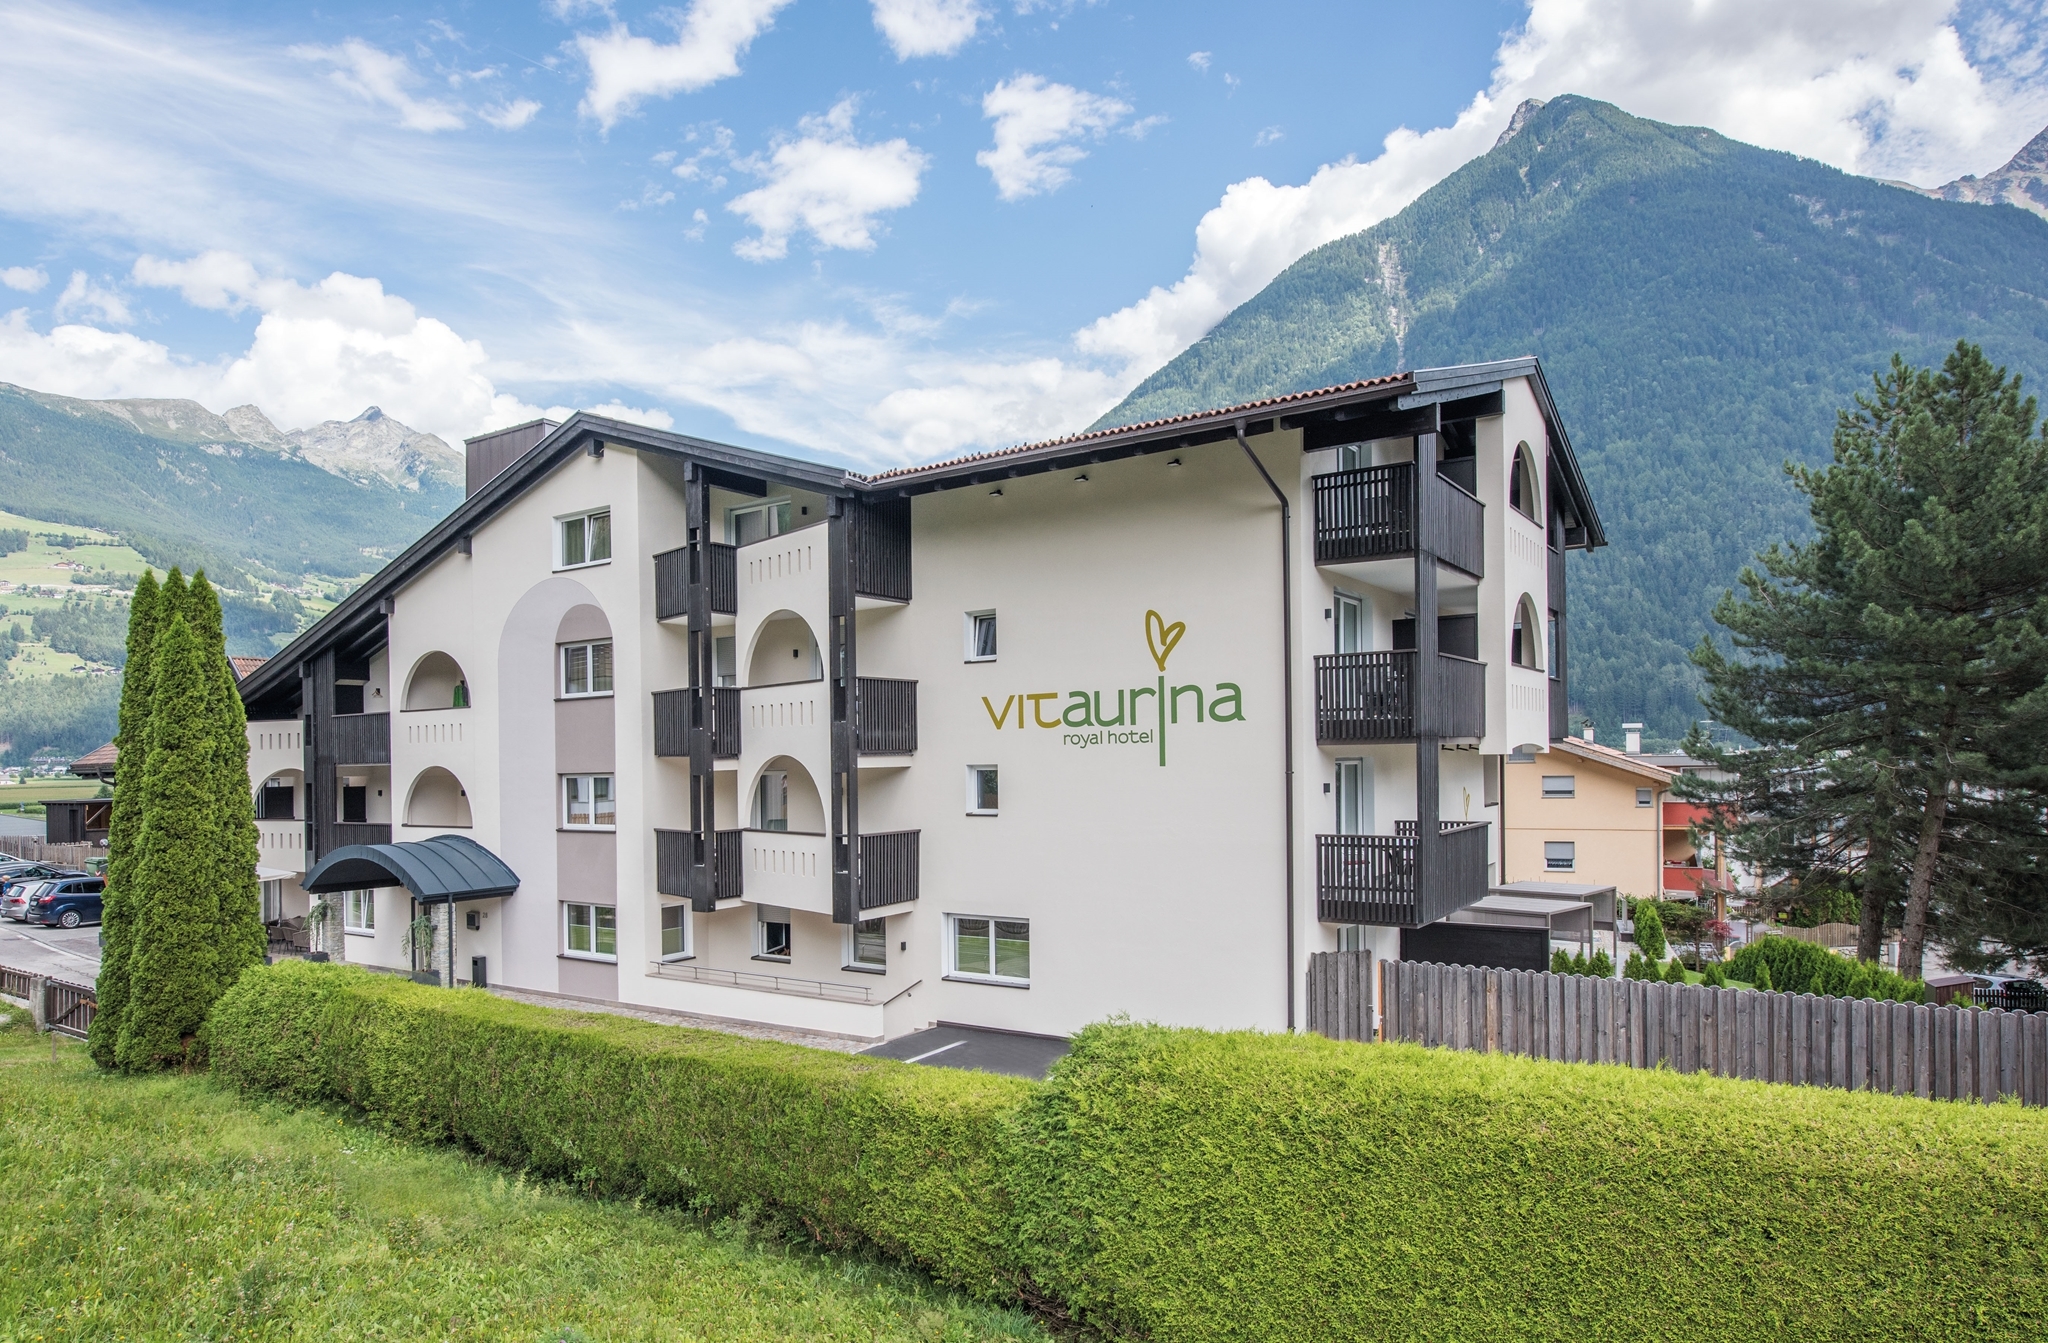 Vitaurina Royal Hotel - Mühlen in Taufers im Tauferer Ahrntal